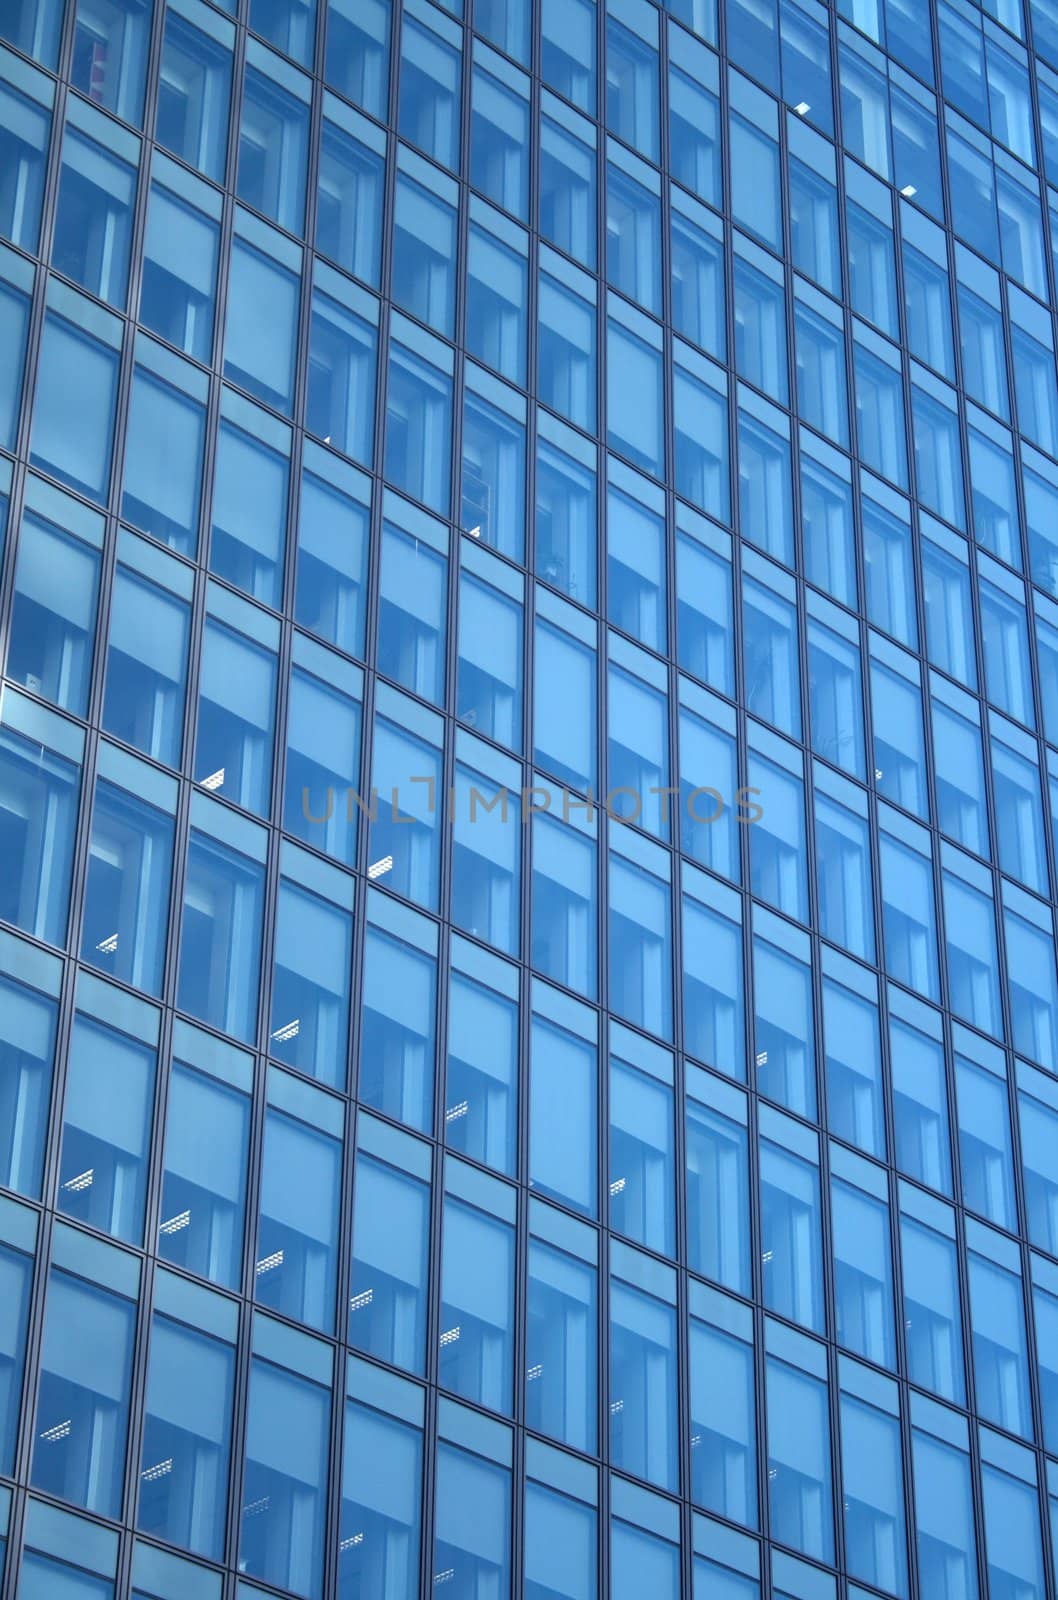 Windows of a skyscraper - working day by anikasalsera